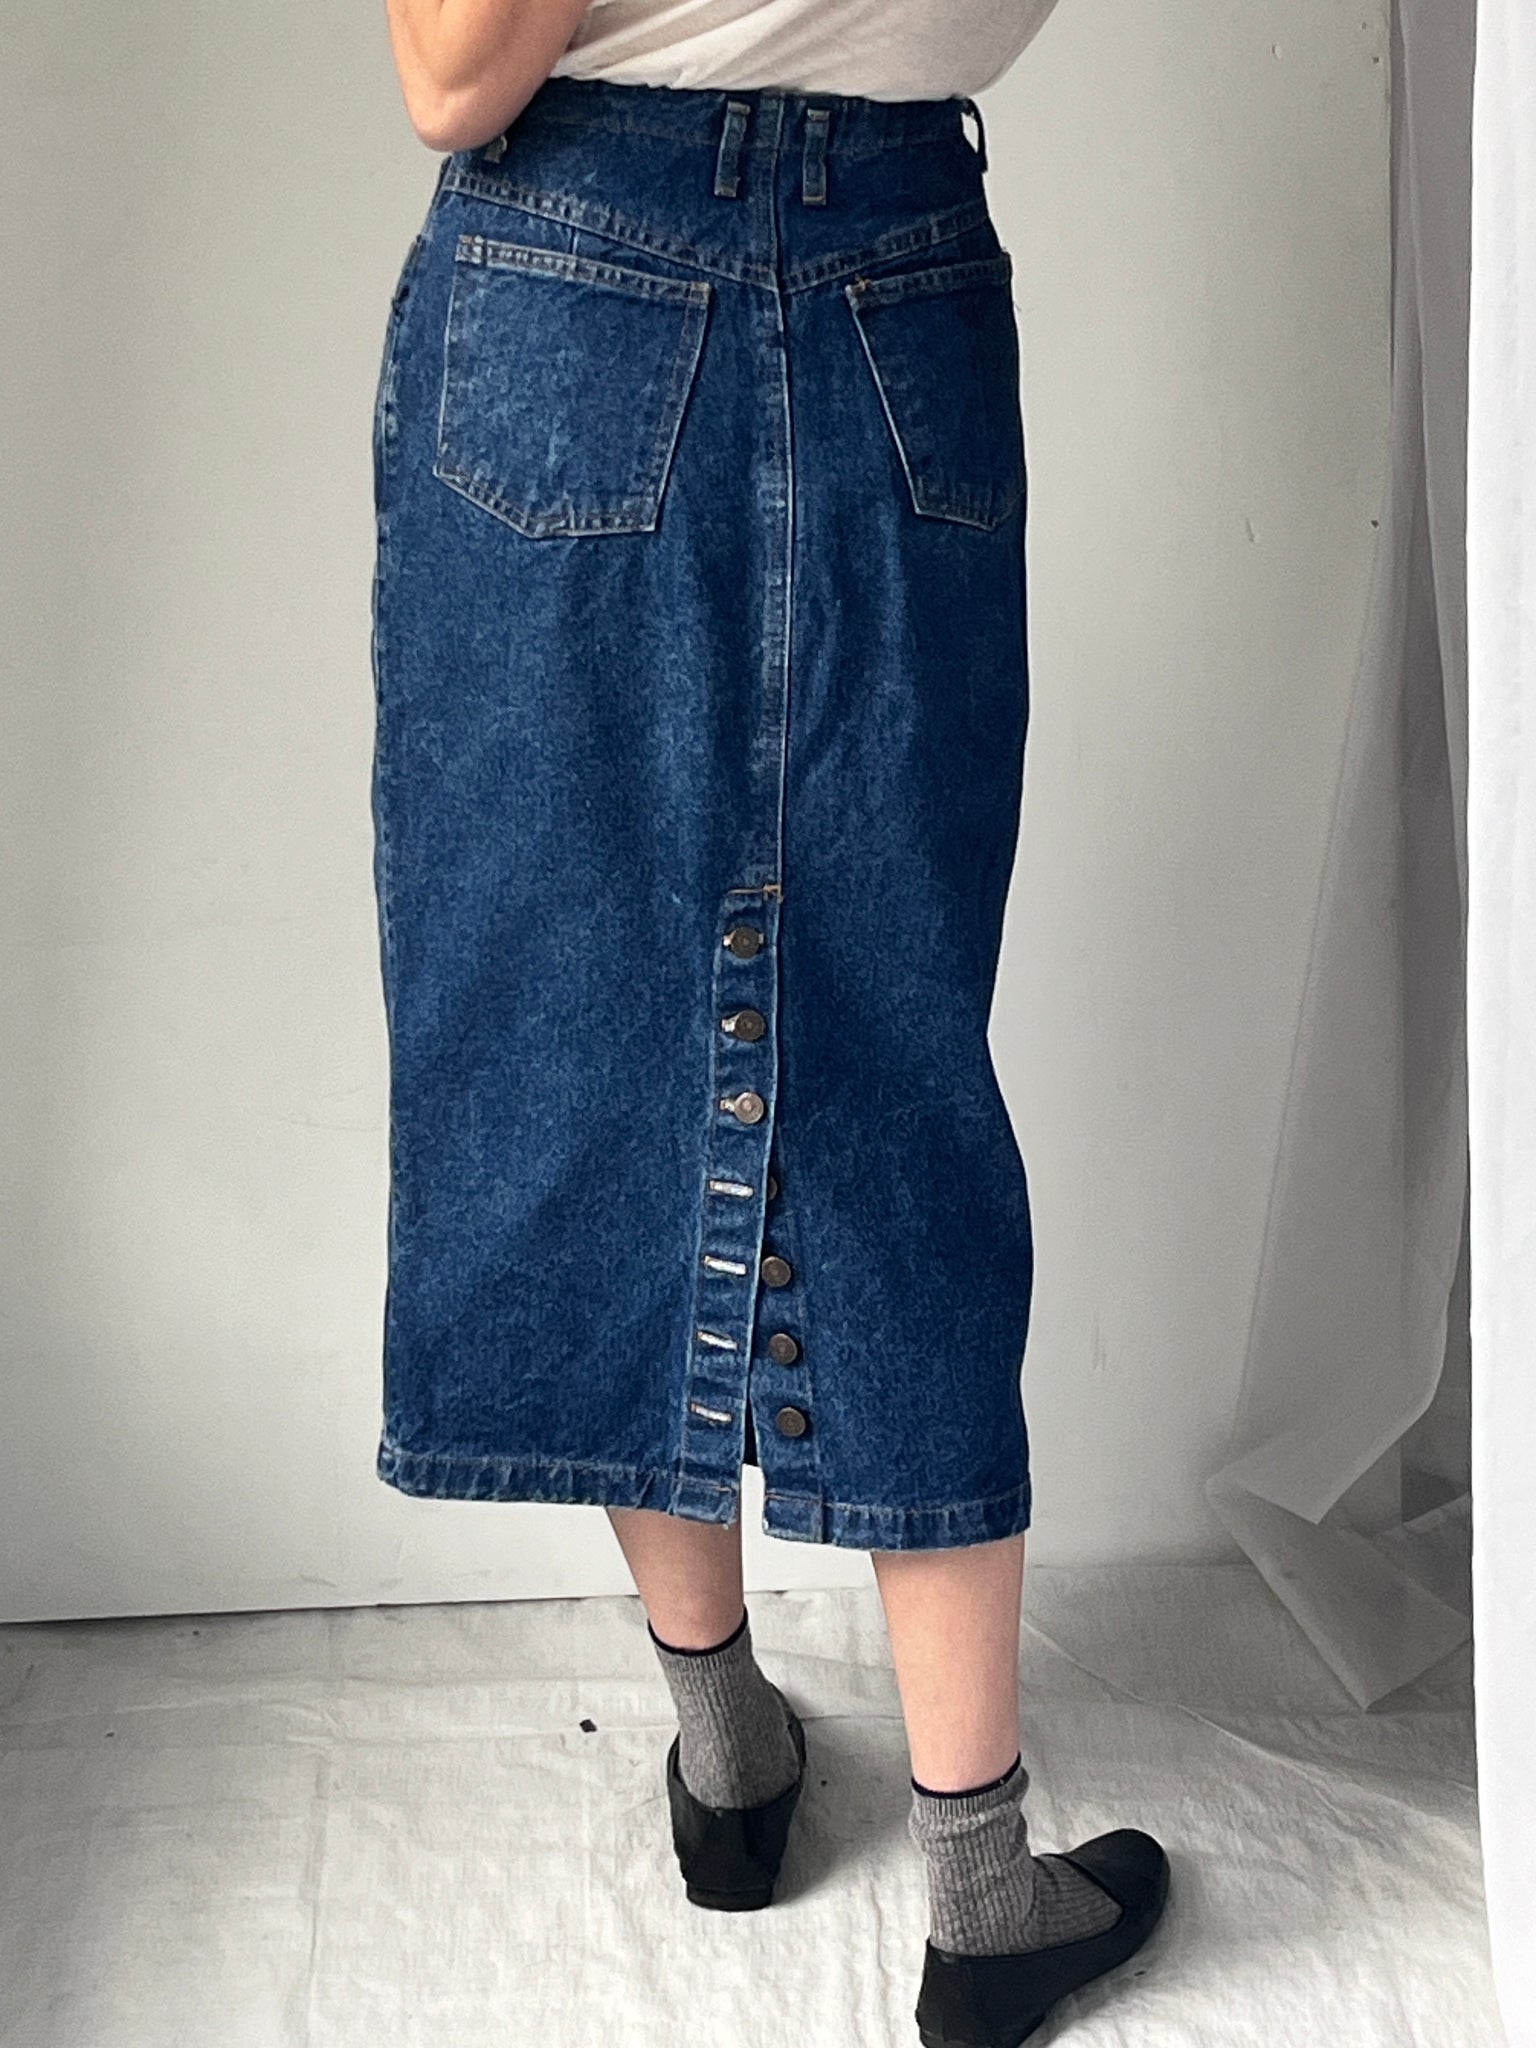 Vintage Gap Denim Skirt with Button Slit